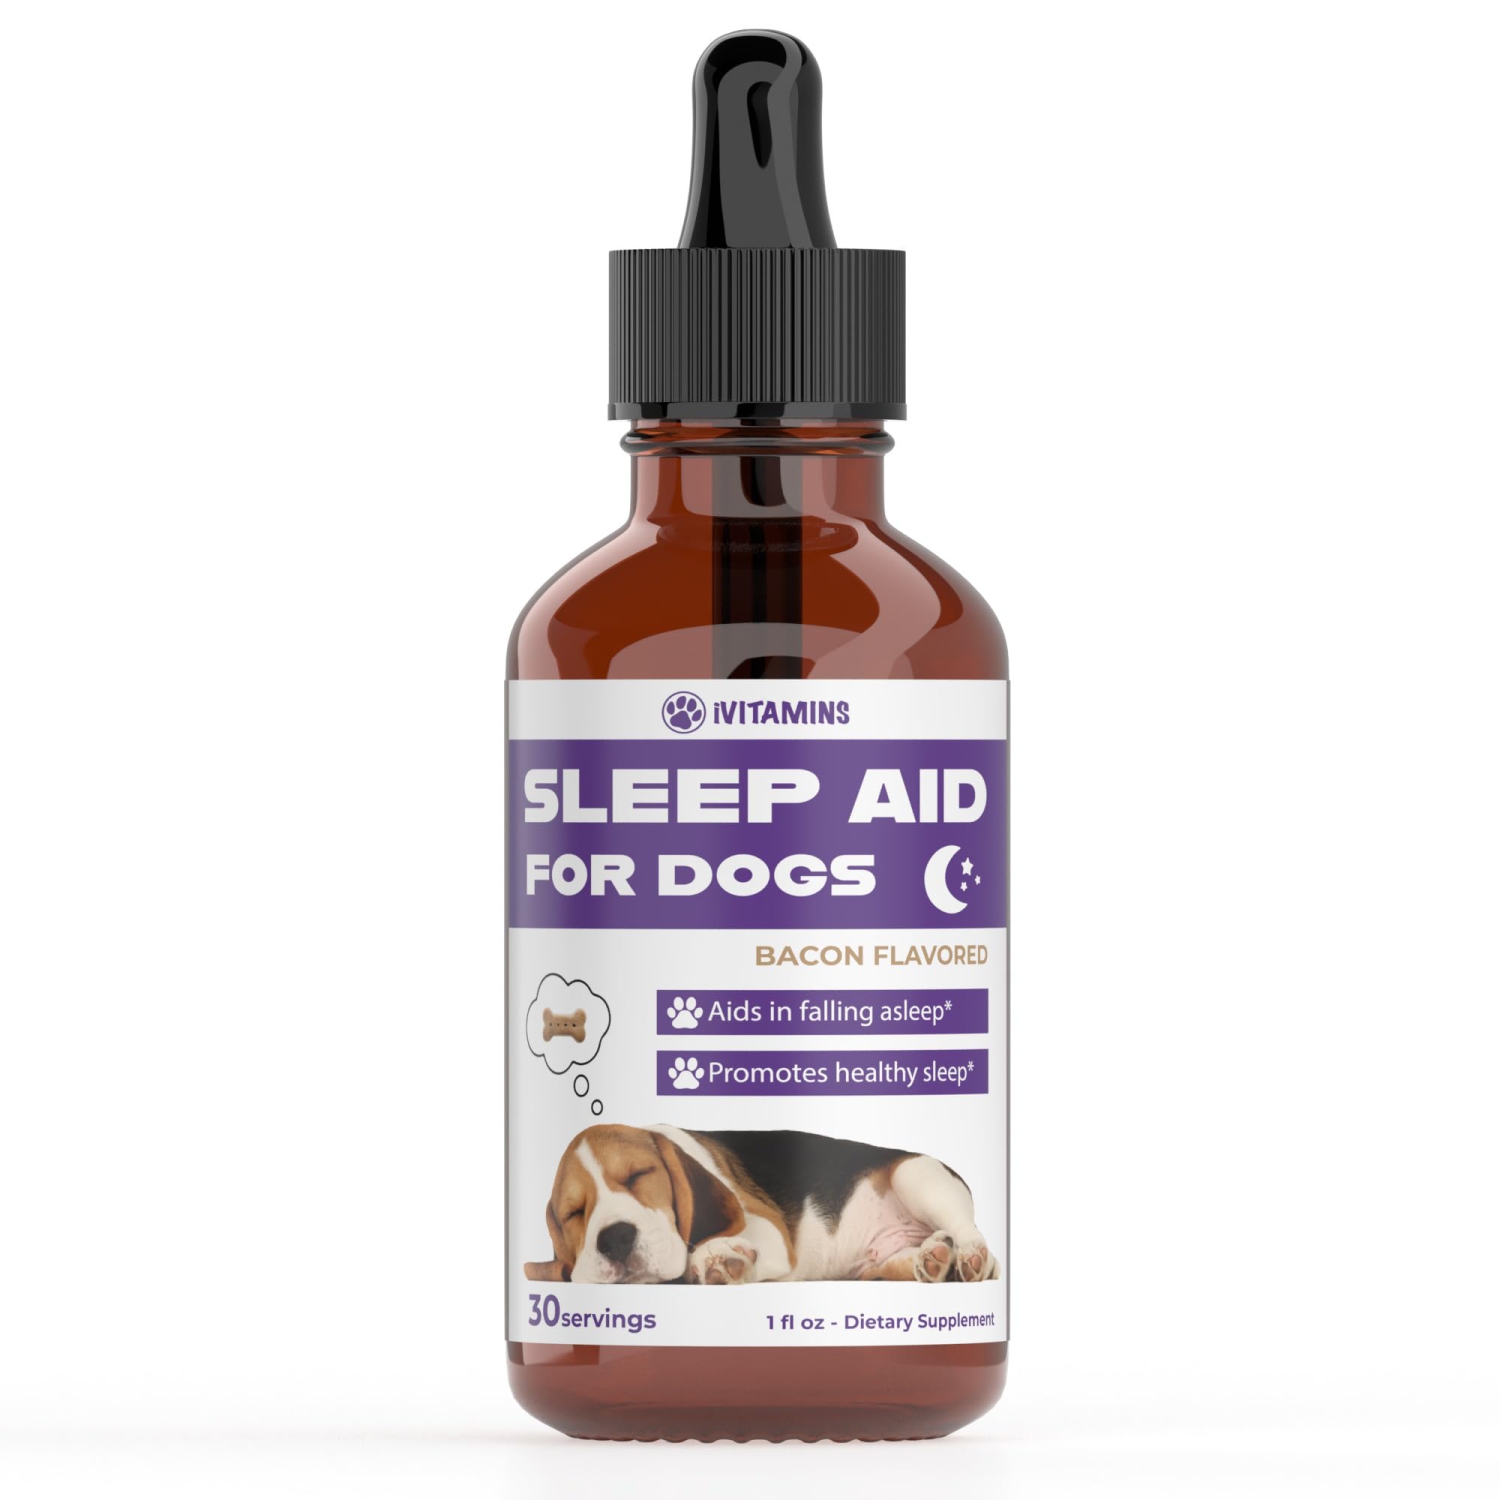 Bacon Flavored Dog Sleep Aid - Promotes Restful Sleep, Calms Anxiety & Provides Melatonin for Healthy Sleep Patterns - 1 fl oz